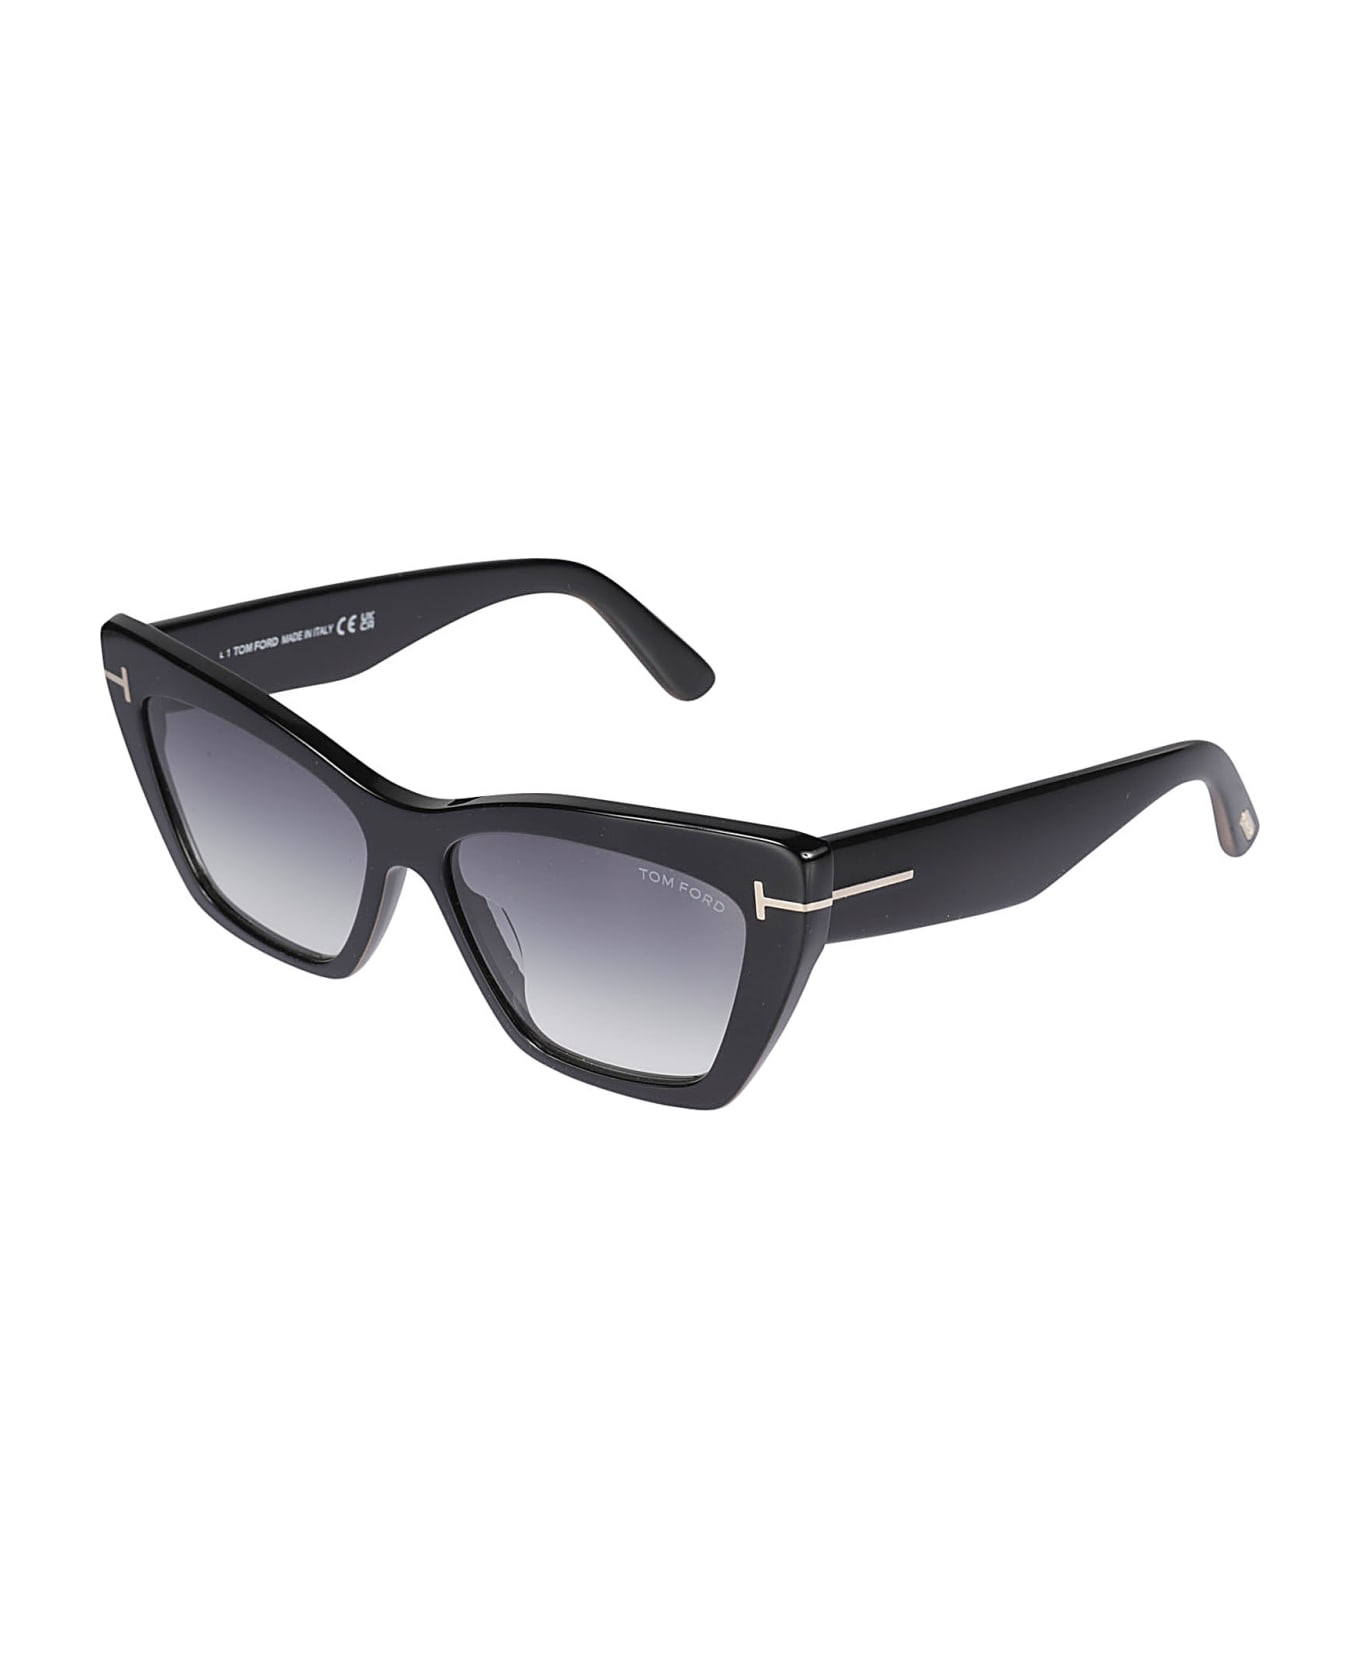 Tom Ford Eyewear Wyatt Sunglasses - Nero